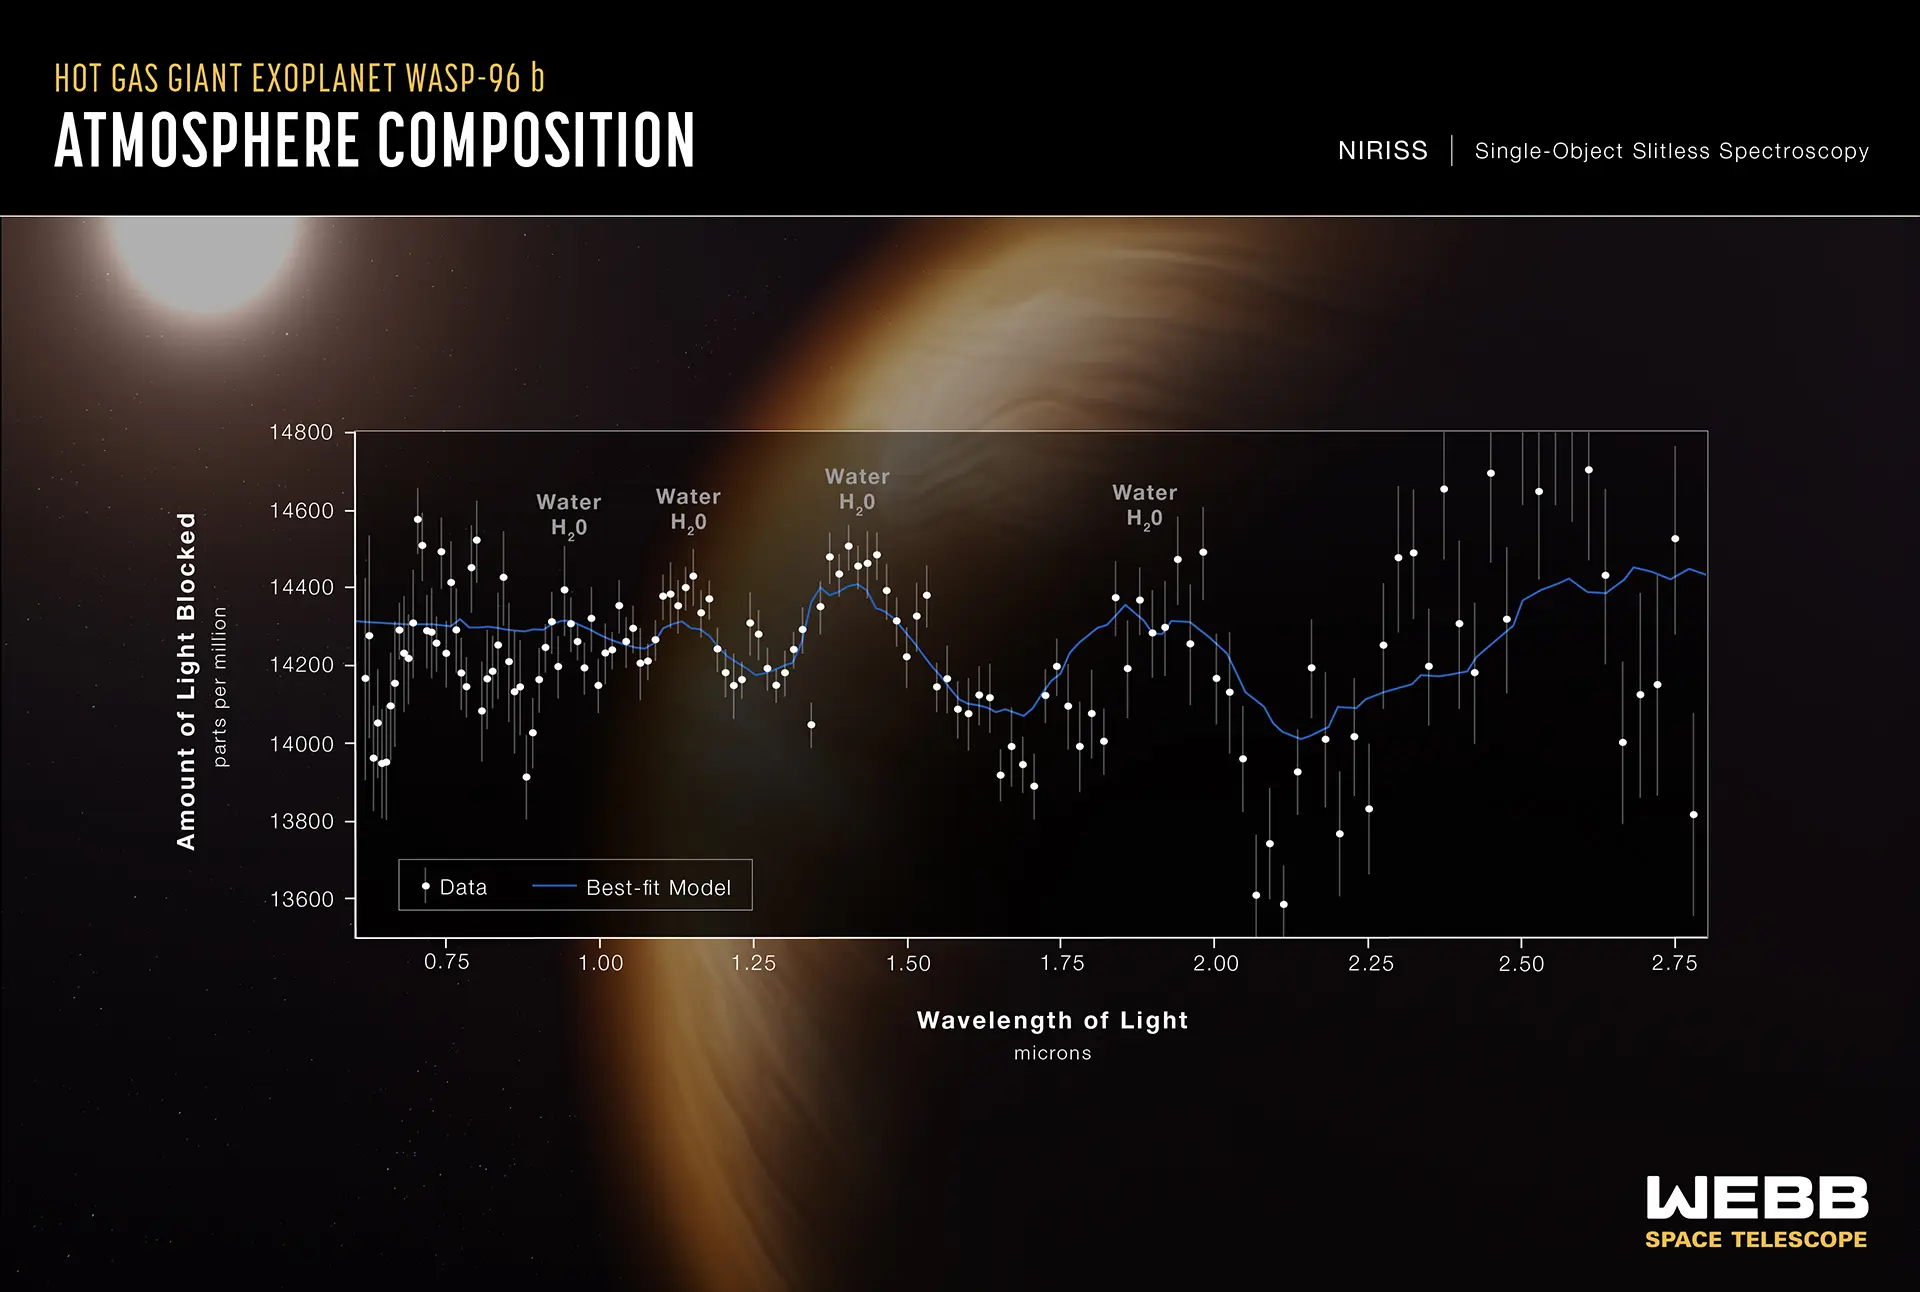 James Webb Space Telescope - Atmosphere Composition